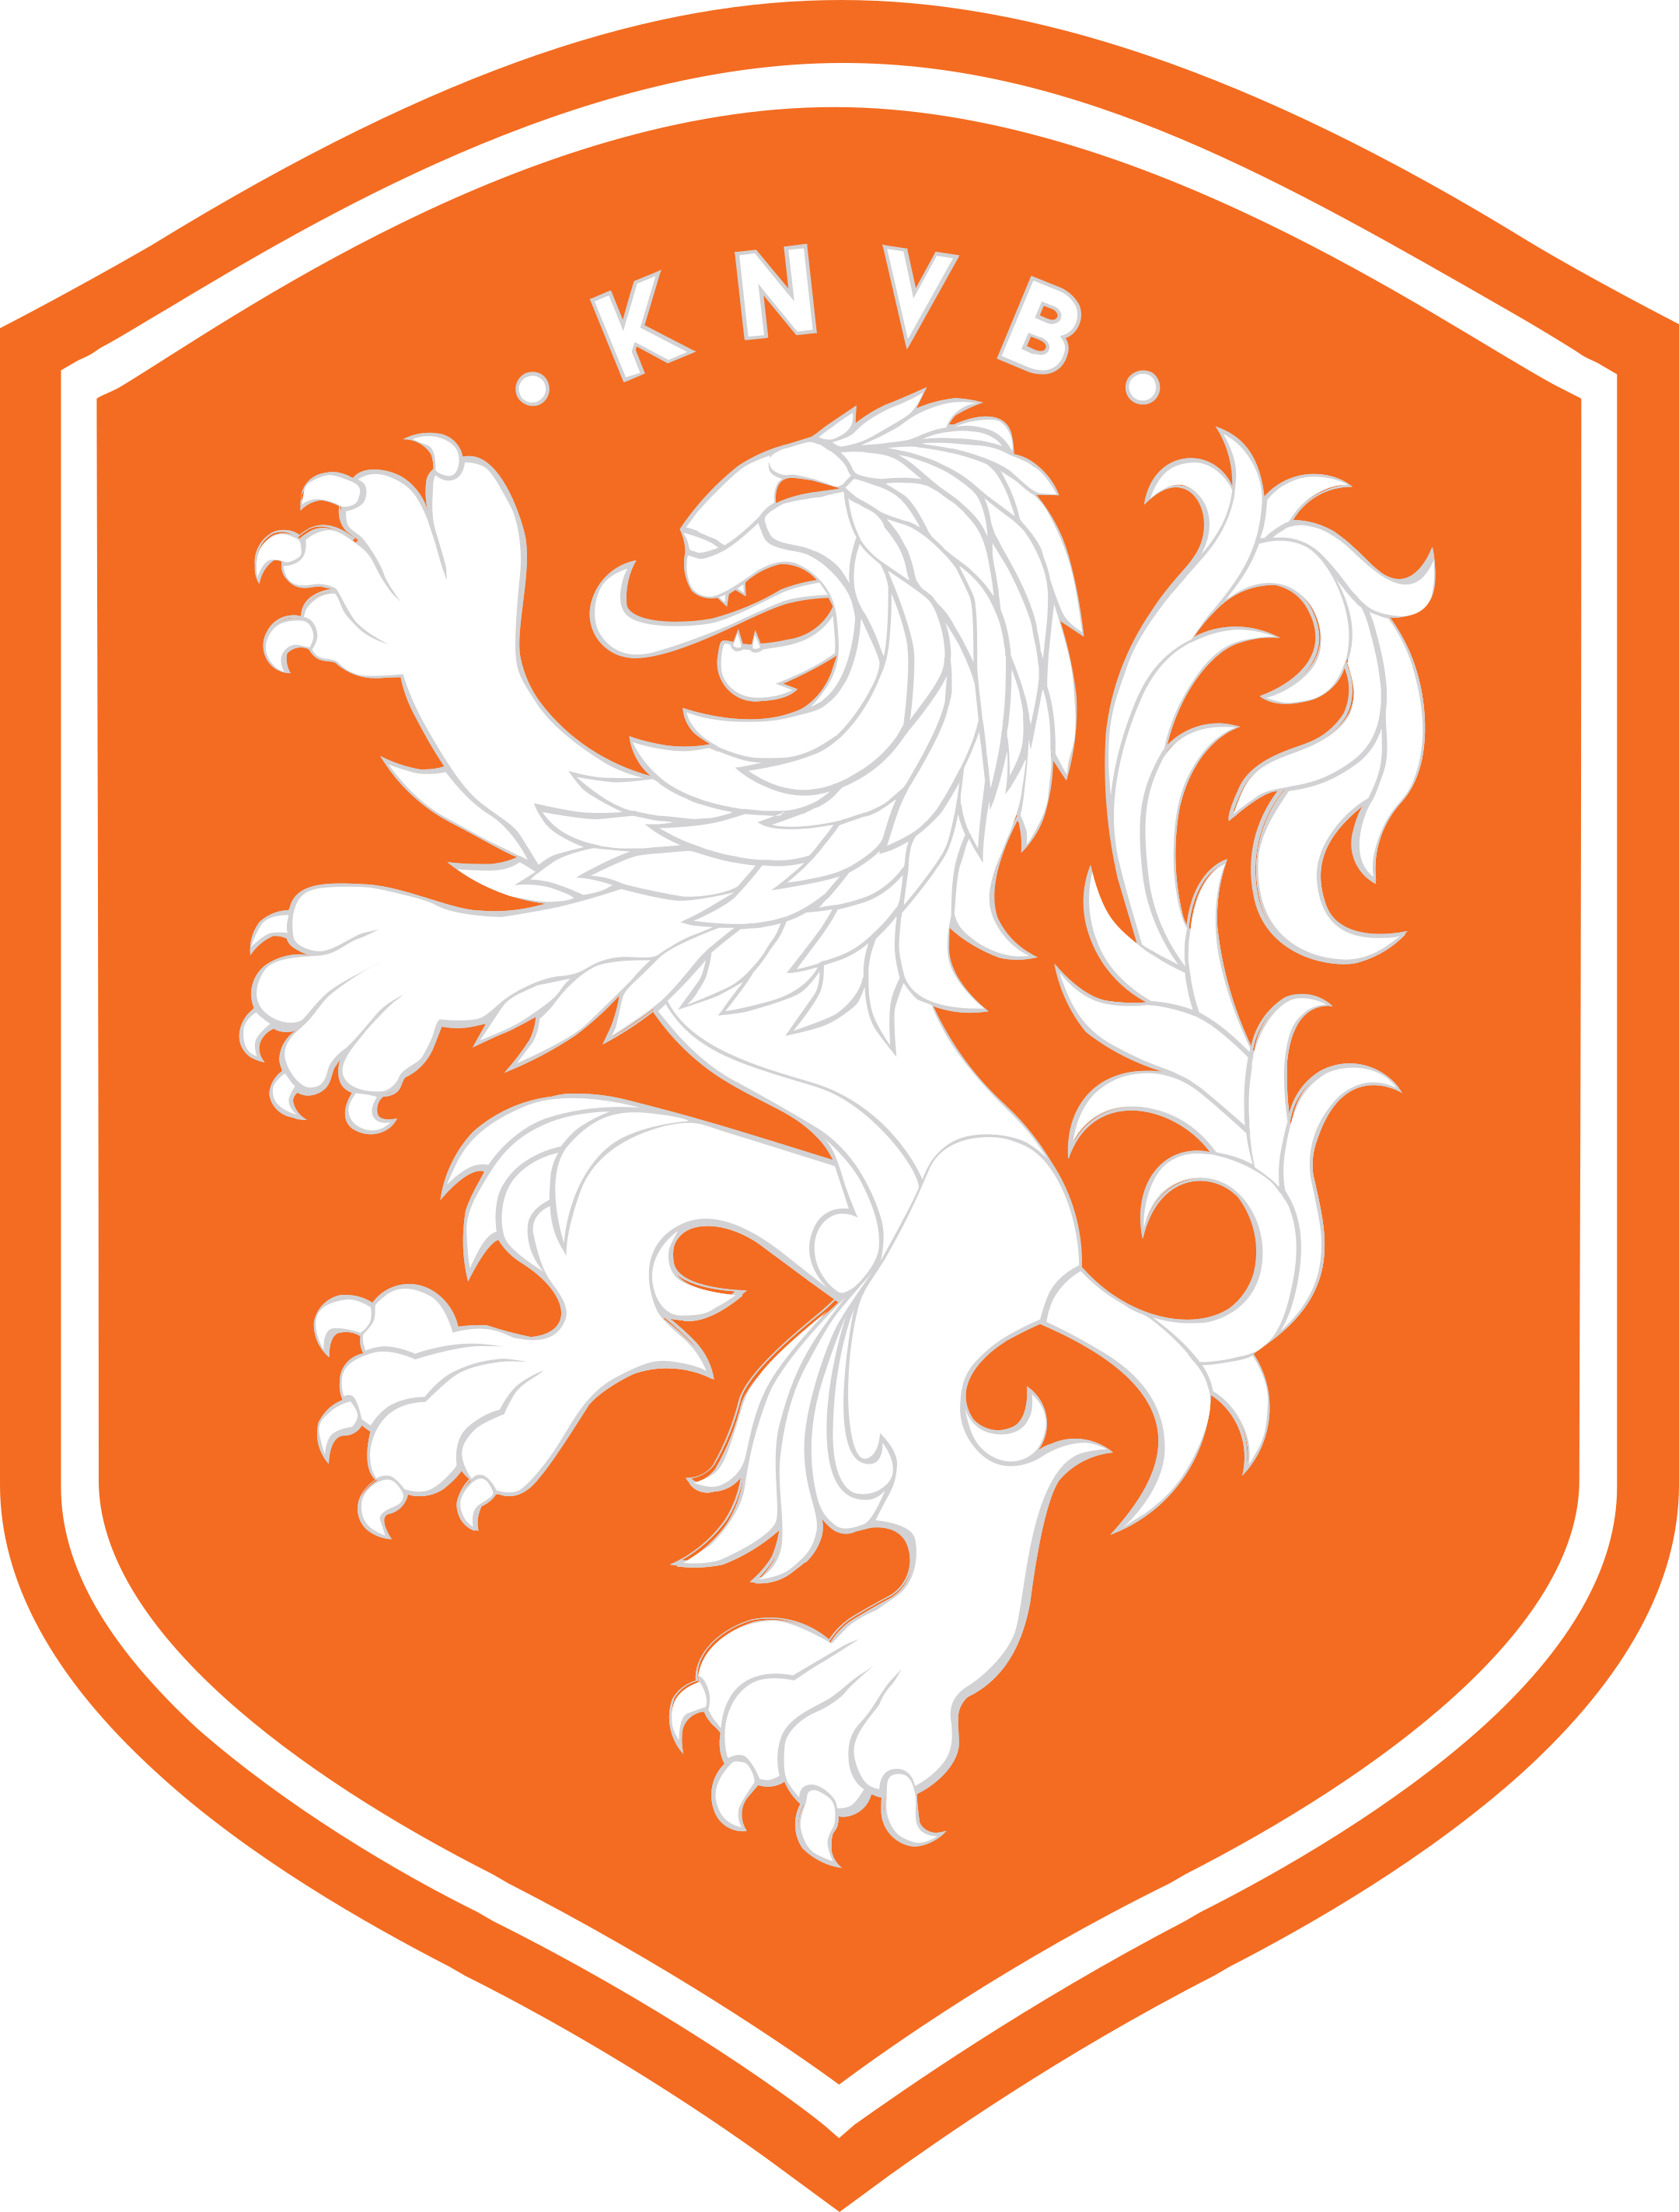 holanda netherlands football team logo 1 - KNVB - Netherlands National Football Team Logo